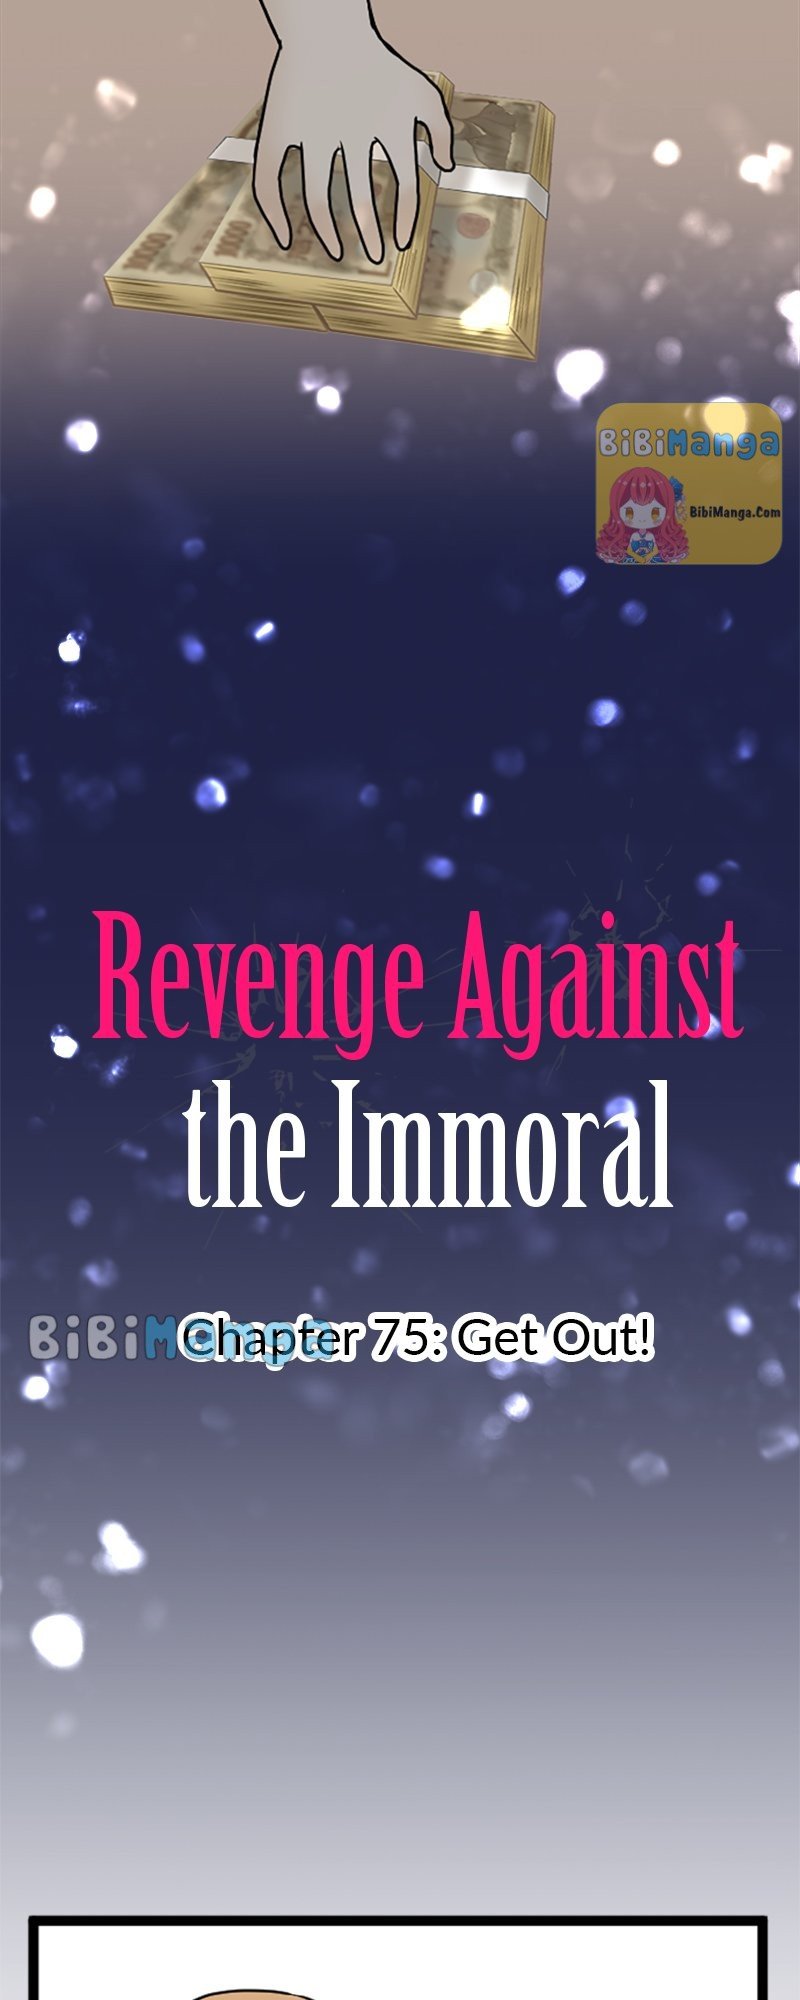 Revenge Against the Immoral chapter 75